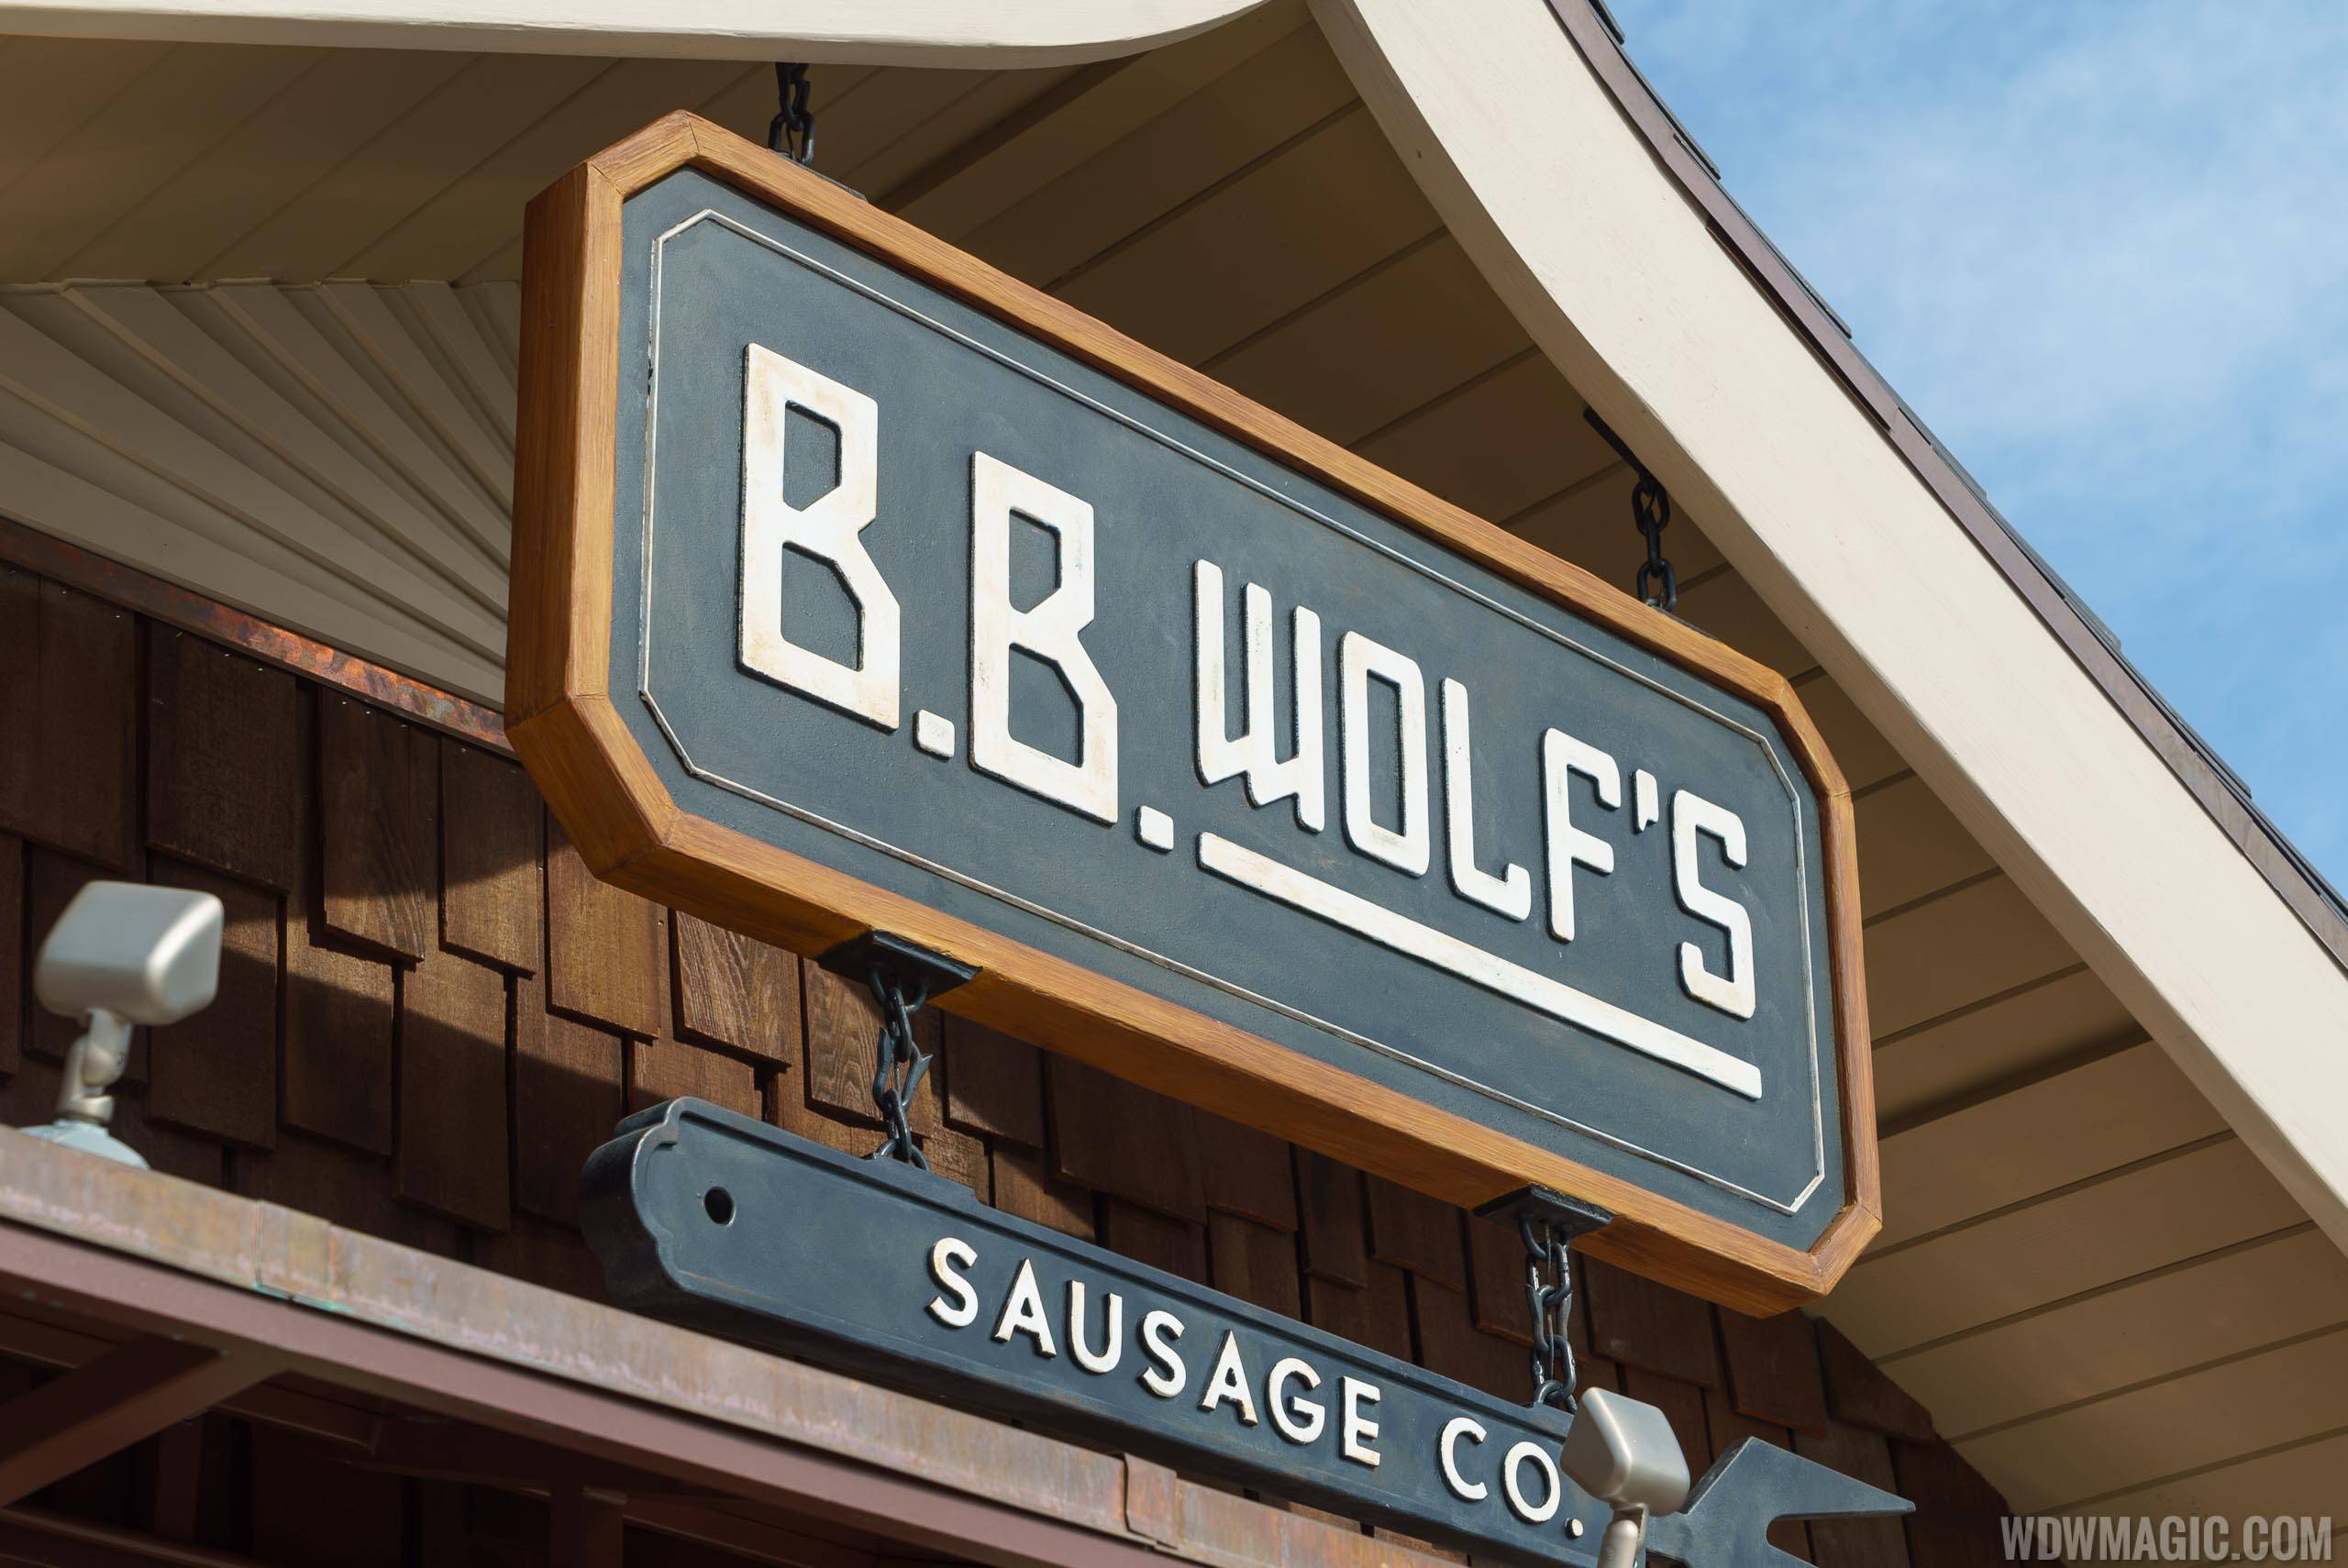 B.B. Wolf's Sausage Co.